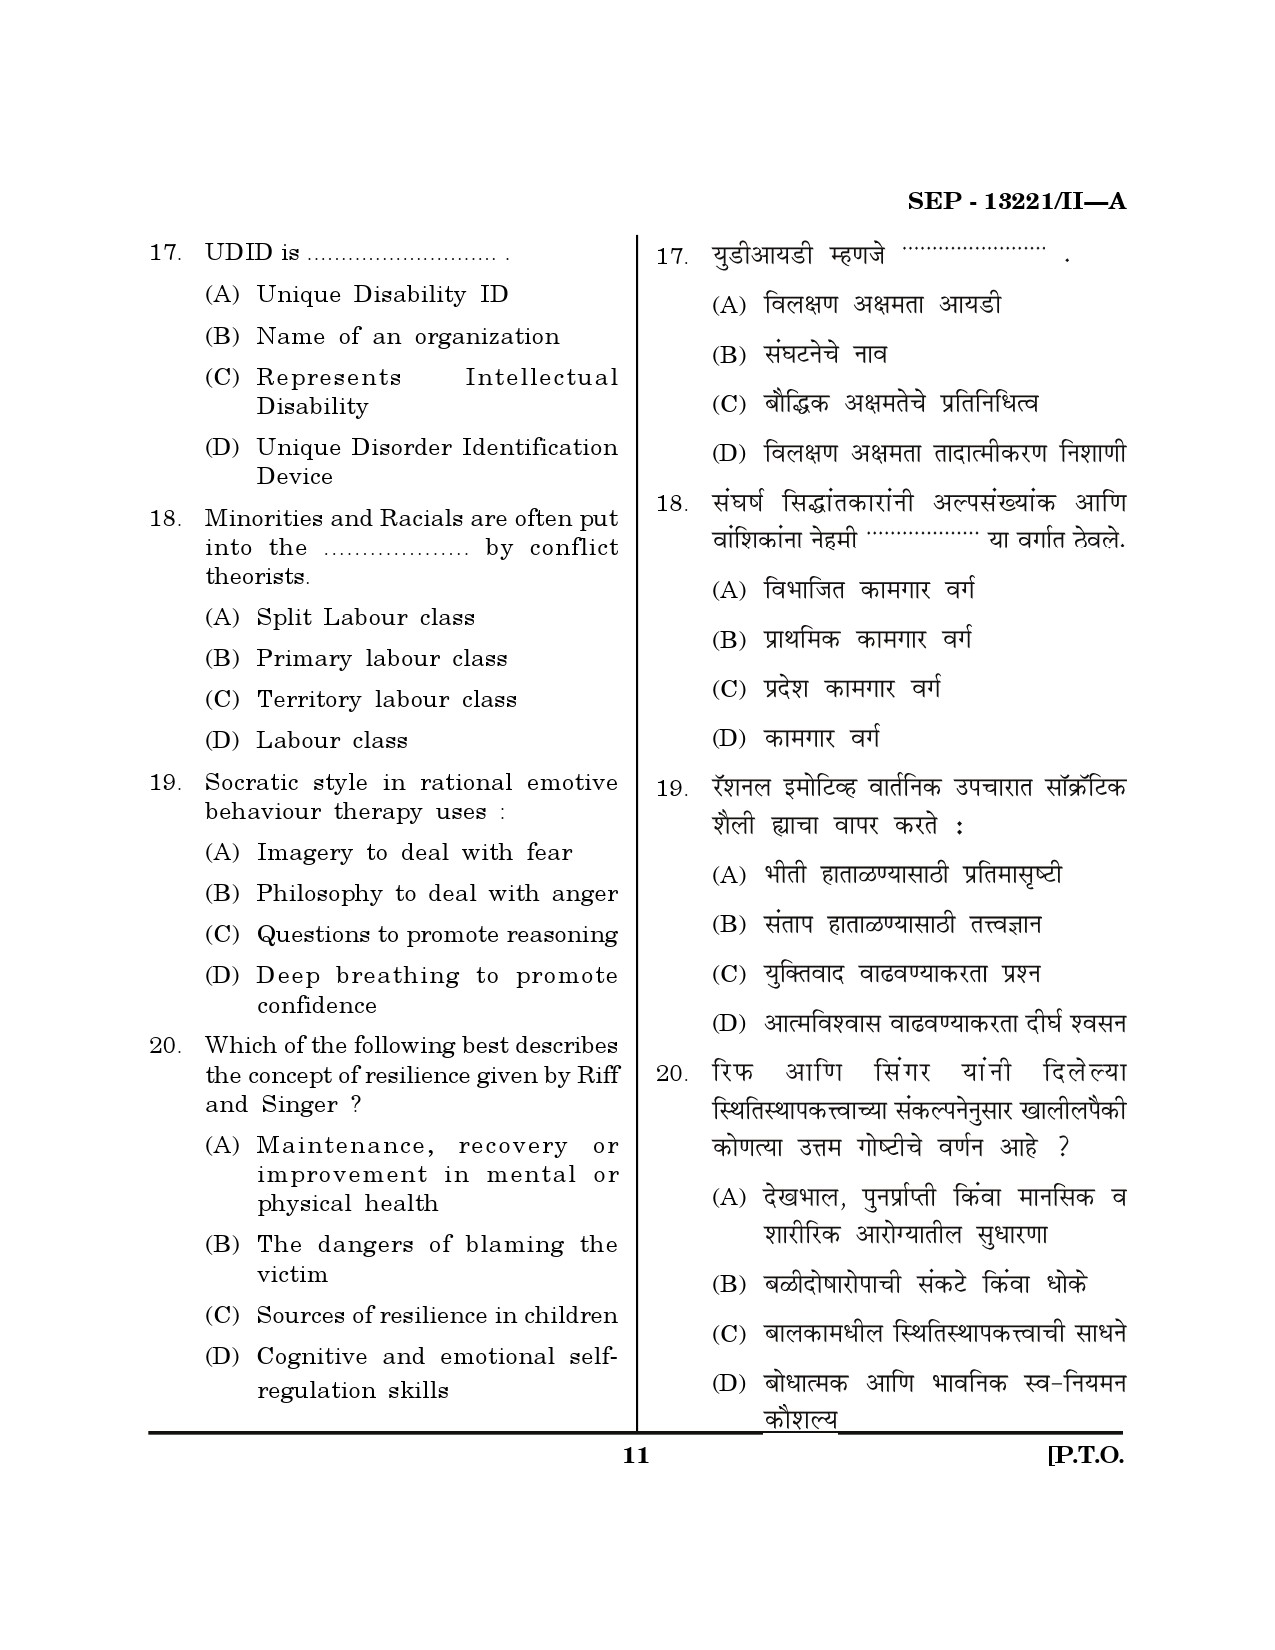 Maharashtra SET Psychology Exam Question Paper September 2021 10